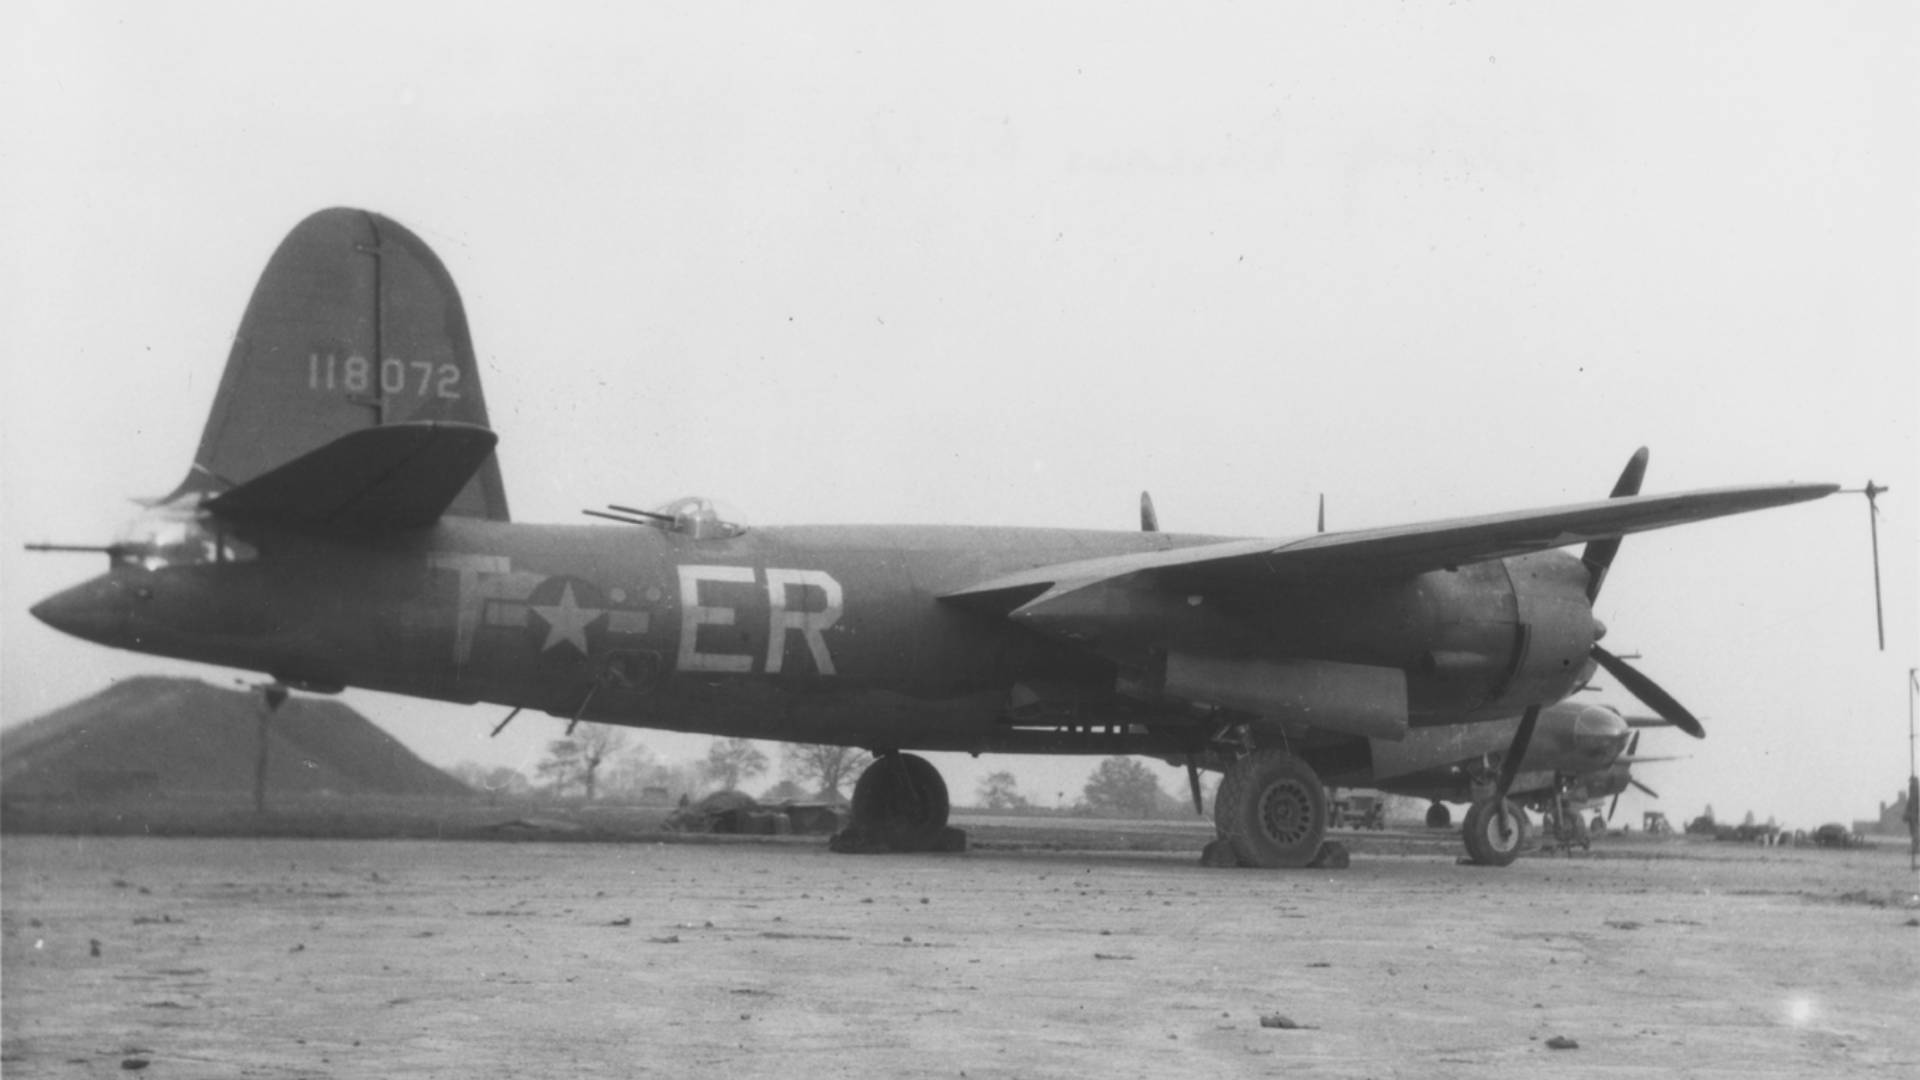 Martin B-26B Marauder #41-18072 at Andrews Field, Essex, England on 14th May 1943